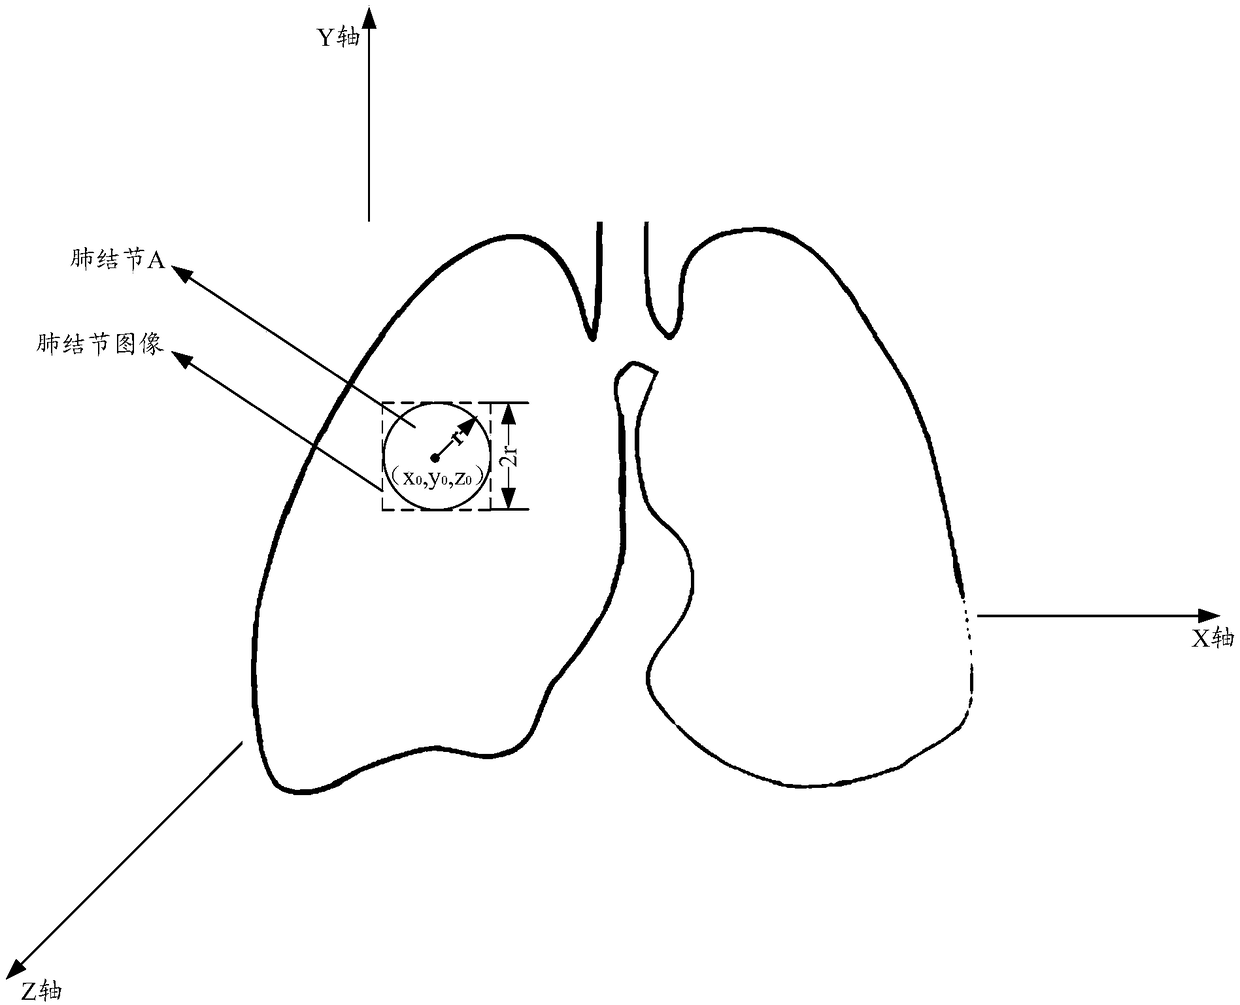 Method and device for analyzing pulmonary nodules